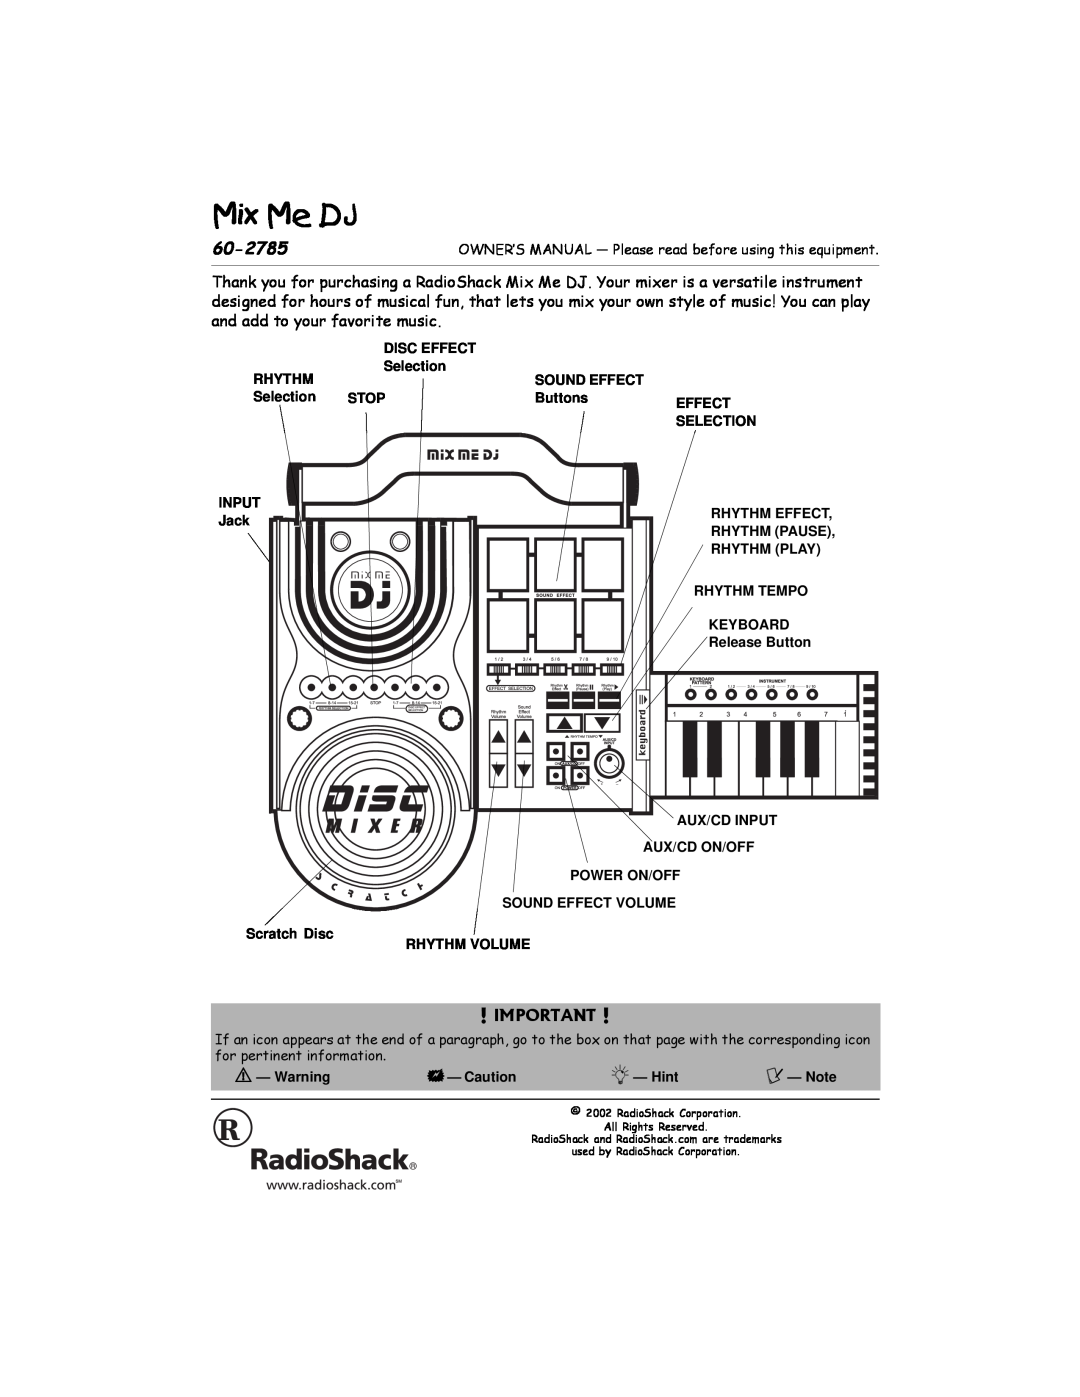 Radio Shack 60-2785 manual #+/2146#06#, ZiïVï5 